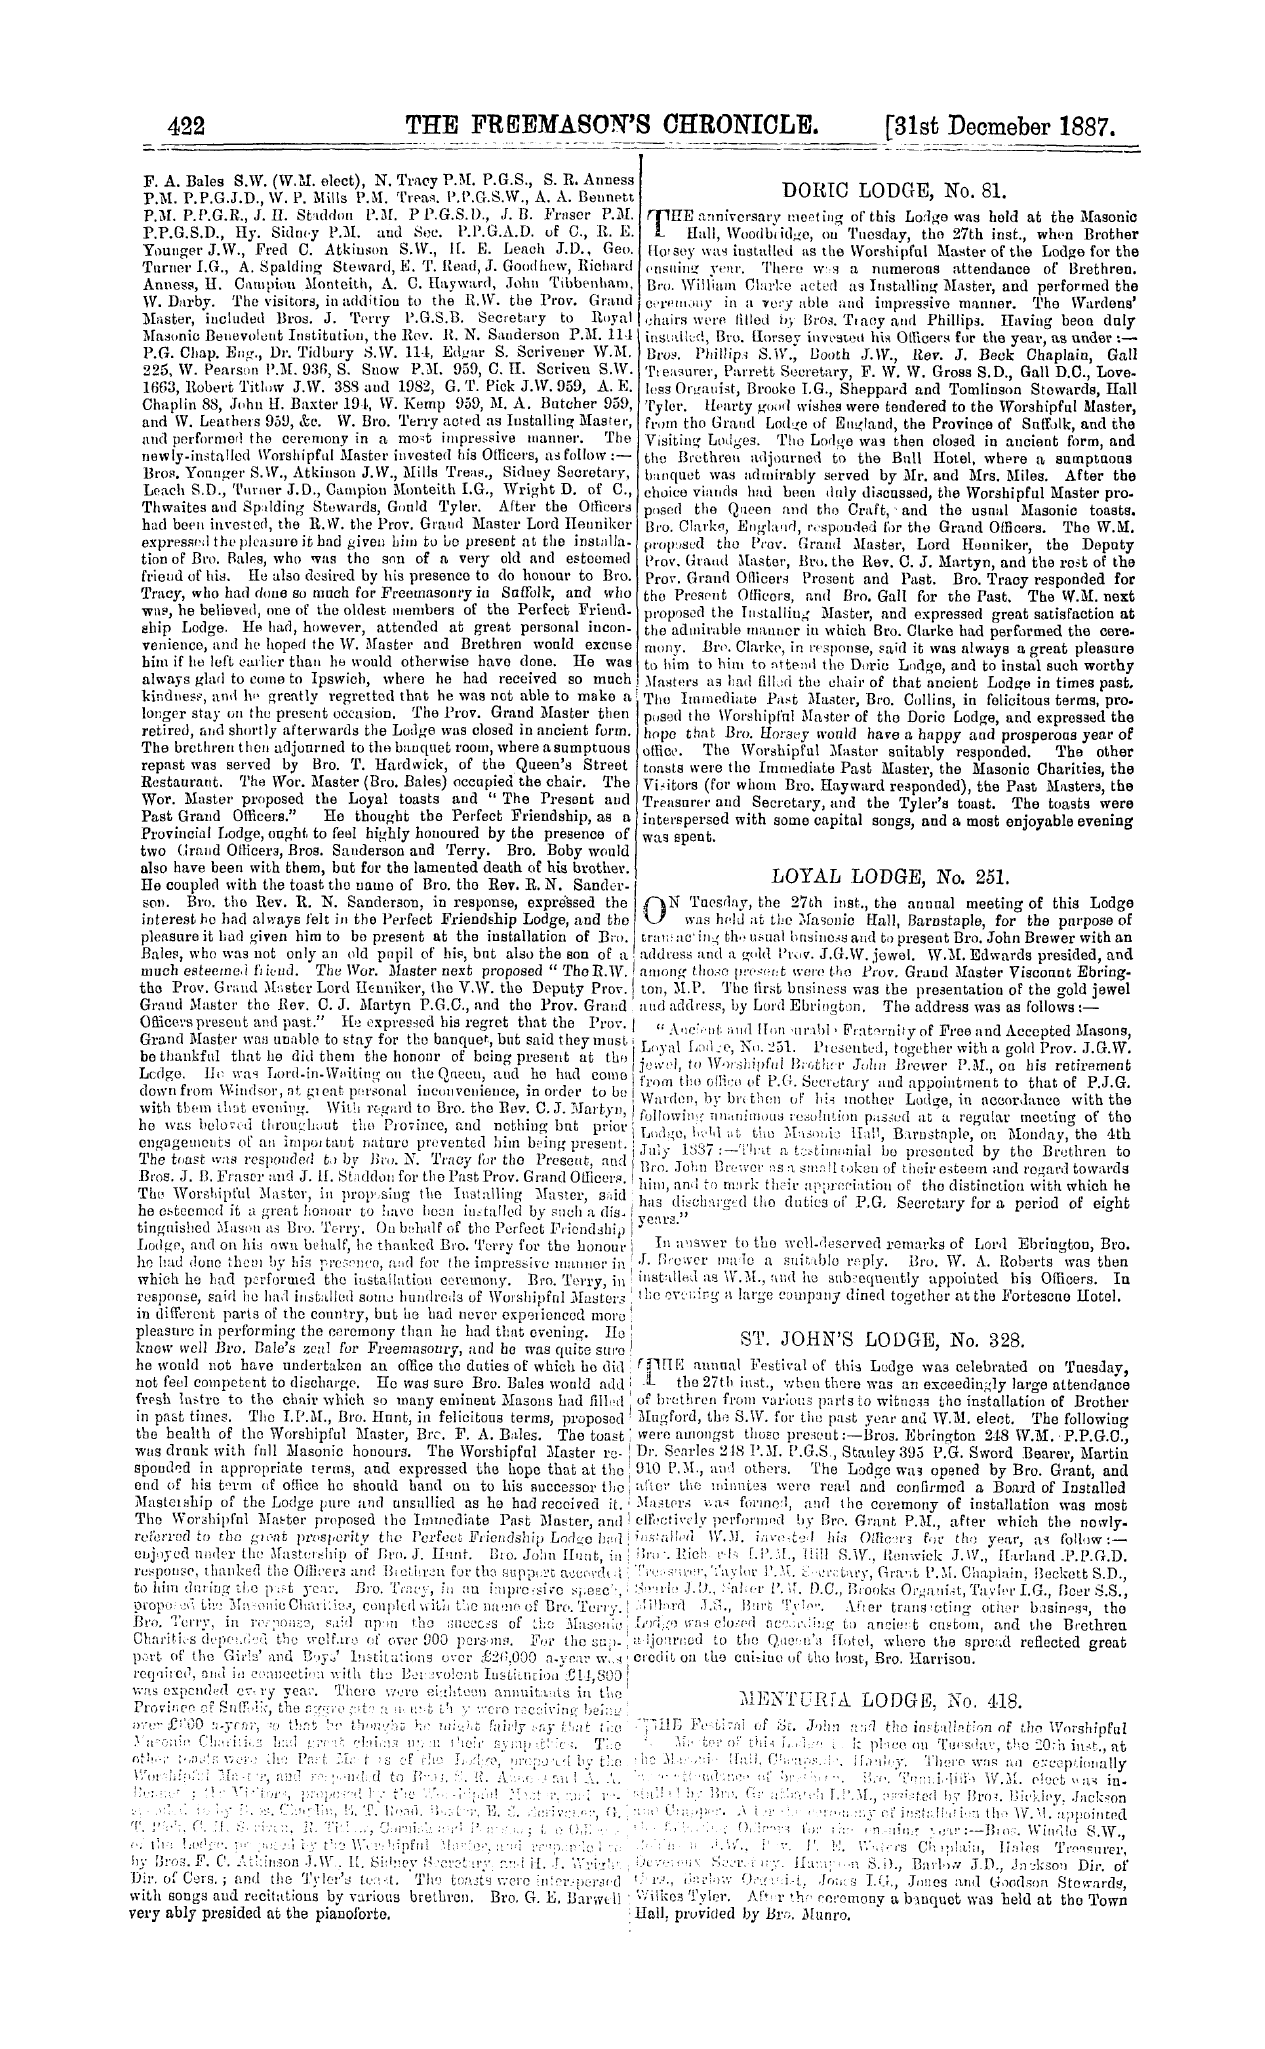 The Freemason's Chronicle: 1887-12-31: 10